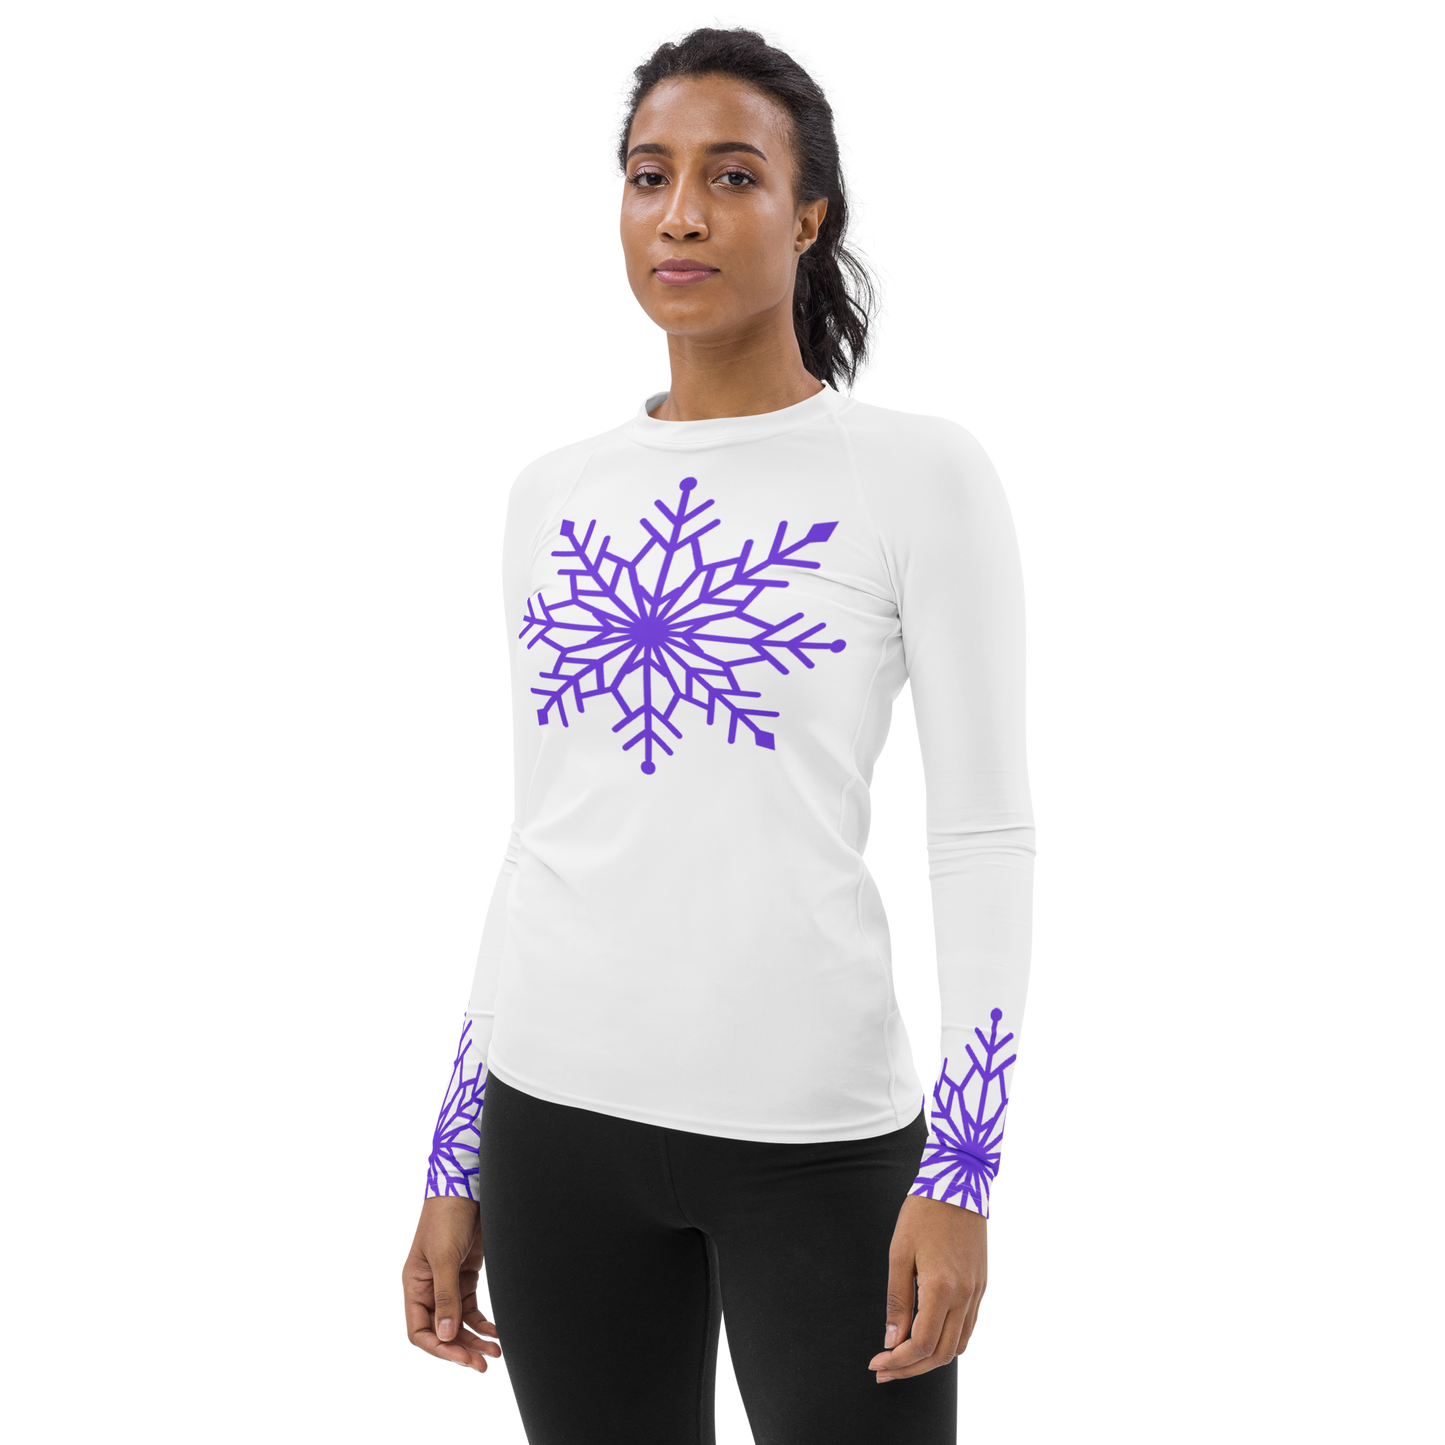 Winter Snowflake Top, Pure Purple Snowflake on White Women's Rash Guard, Holiday Top